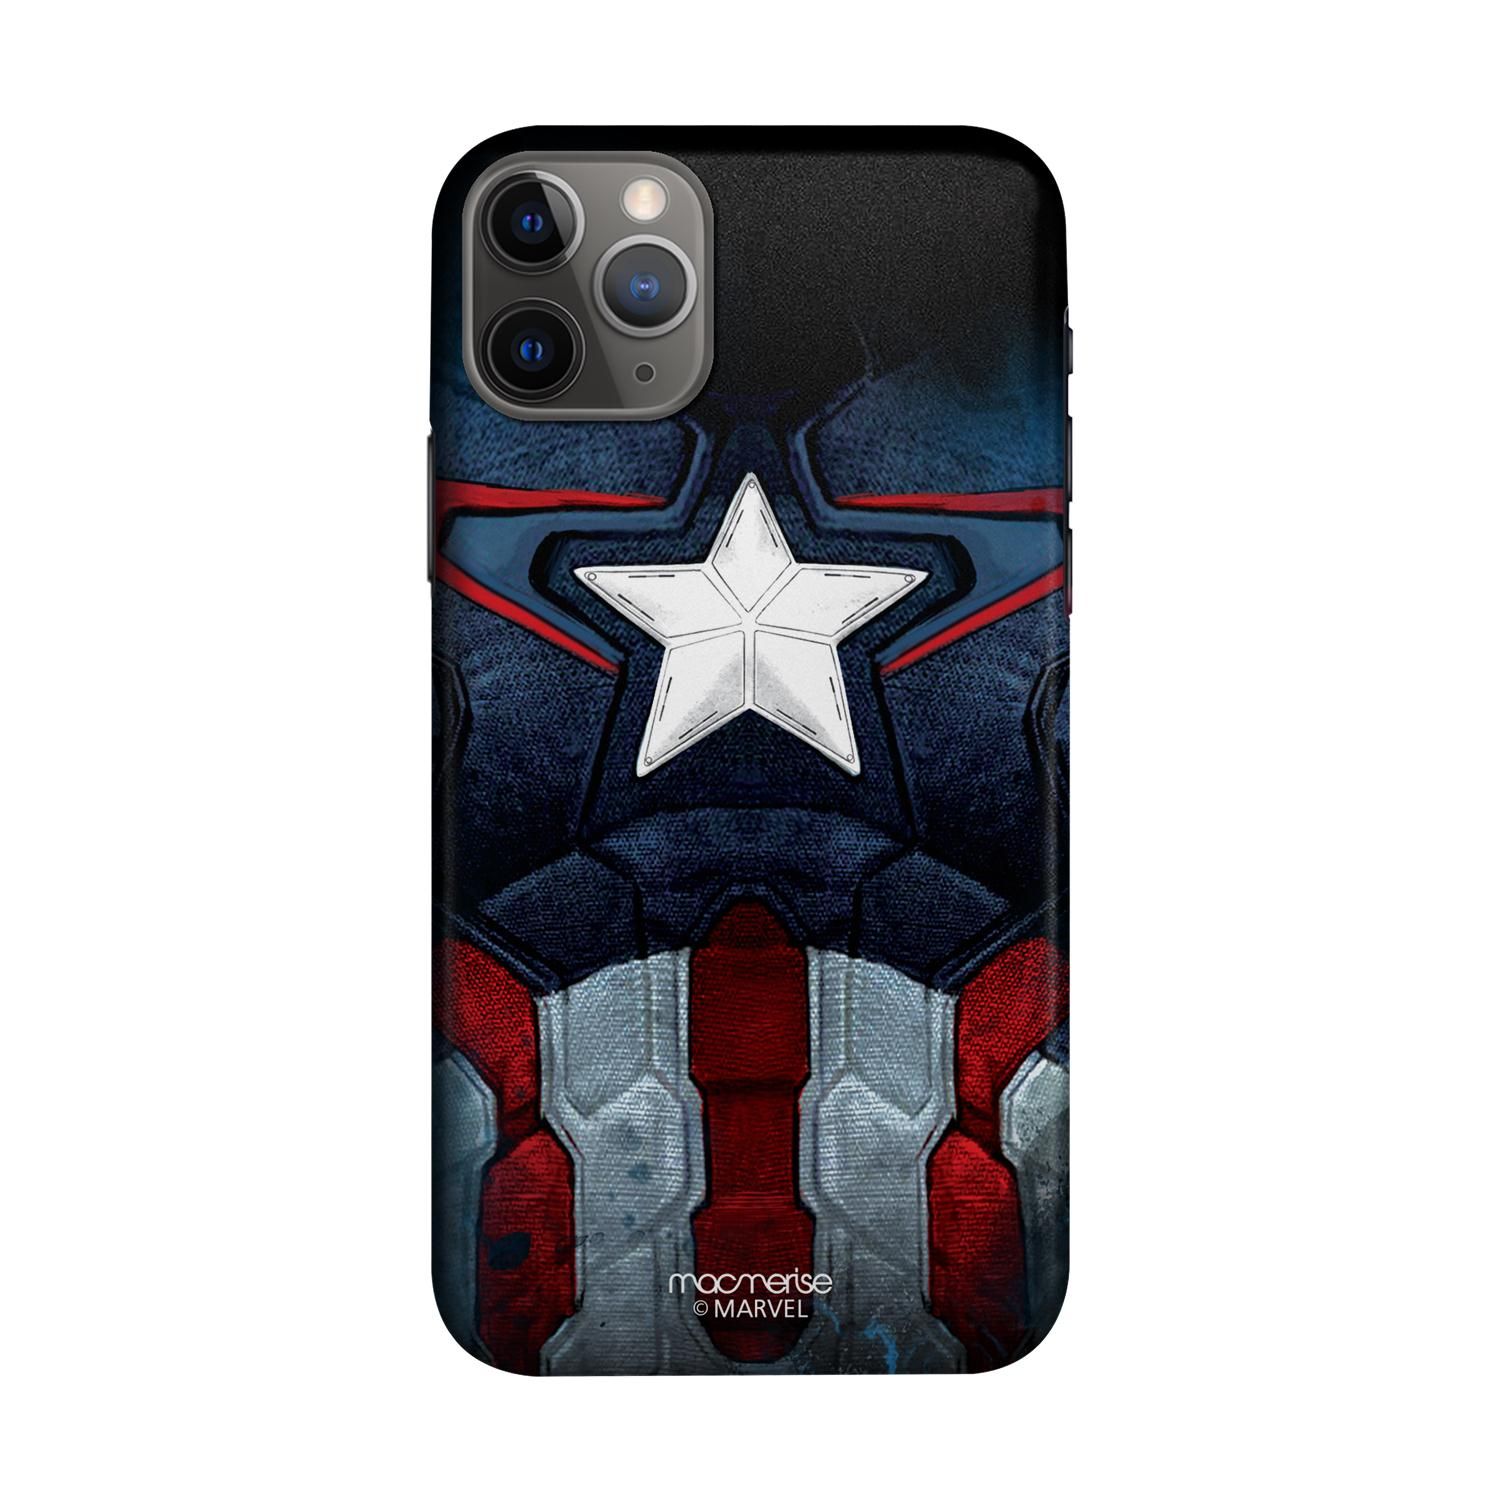 Buy Cap Am Suit - Sleek Phone Case for iPhone 11 Pro Max Online